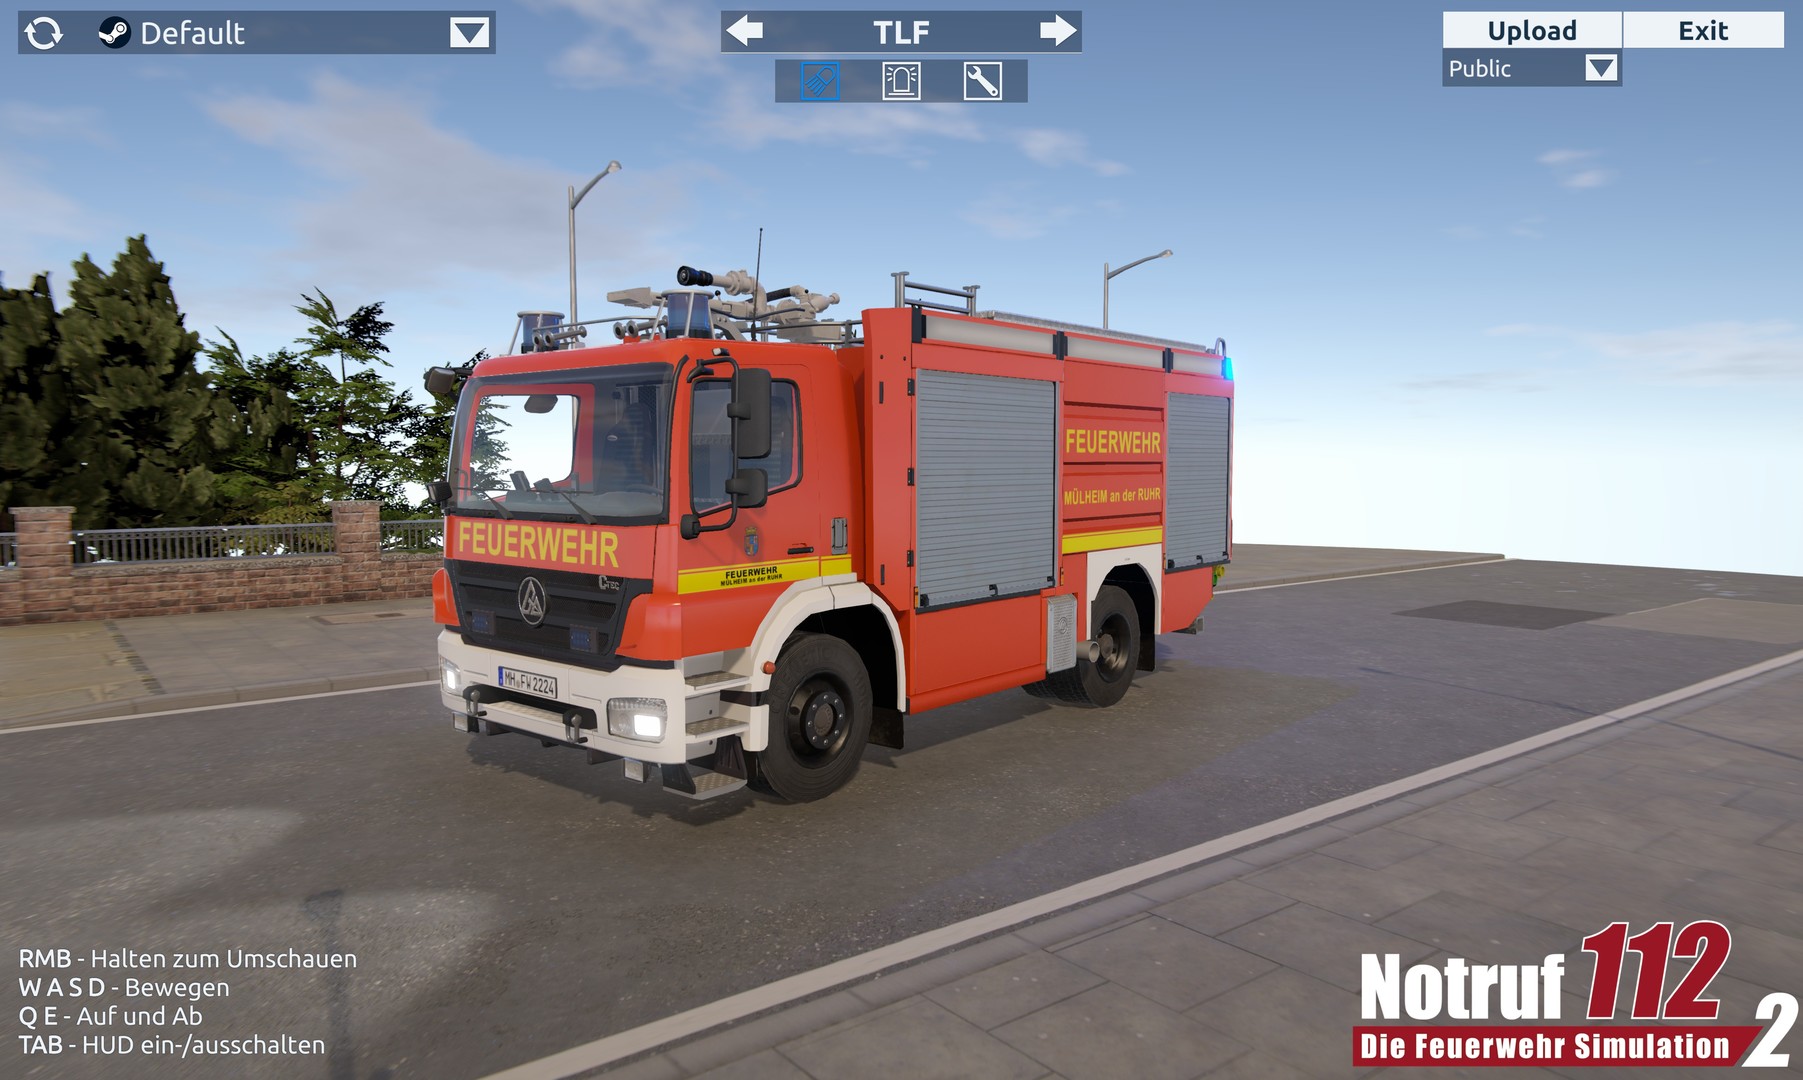 Notruf 112 - Die Feuerwehr Simulation 2: Showroom game revenue and stats on  Steam – Steam Marketing Tool